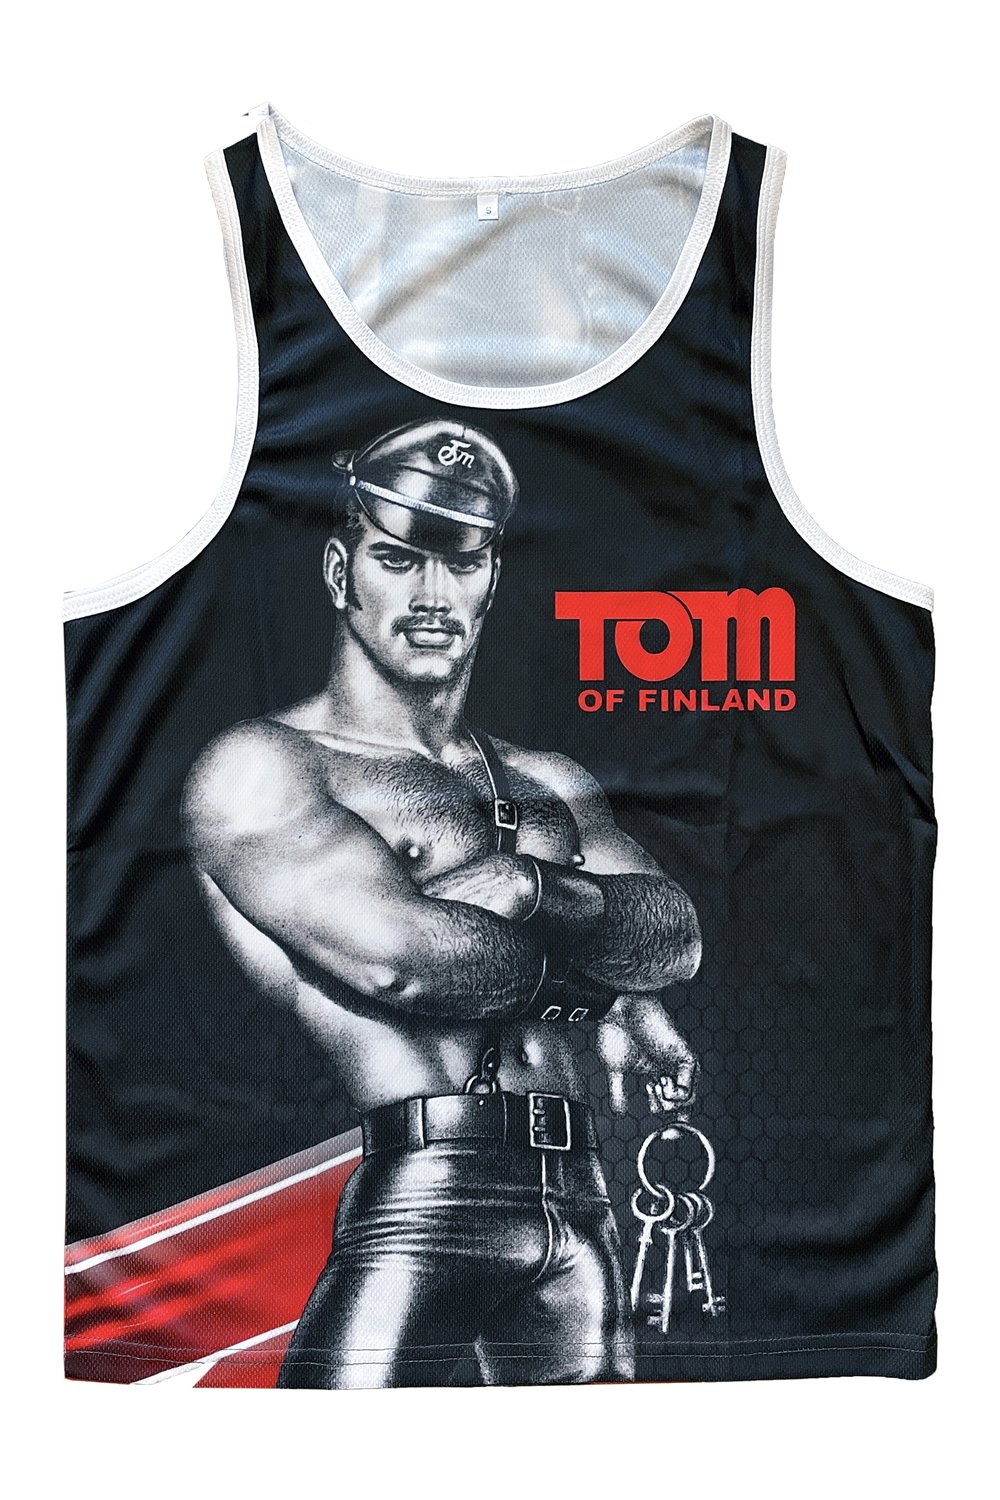 Tom of Finland Tin Rolling Tray — Peachy Kings: Gay T-shirts + Tom